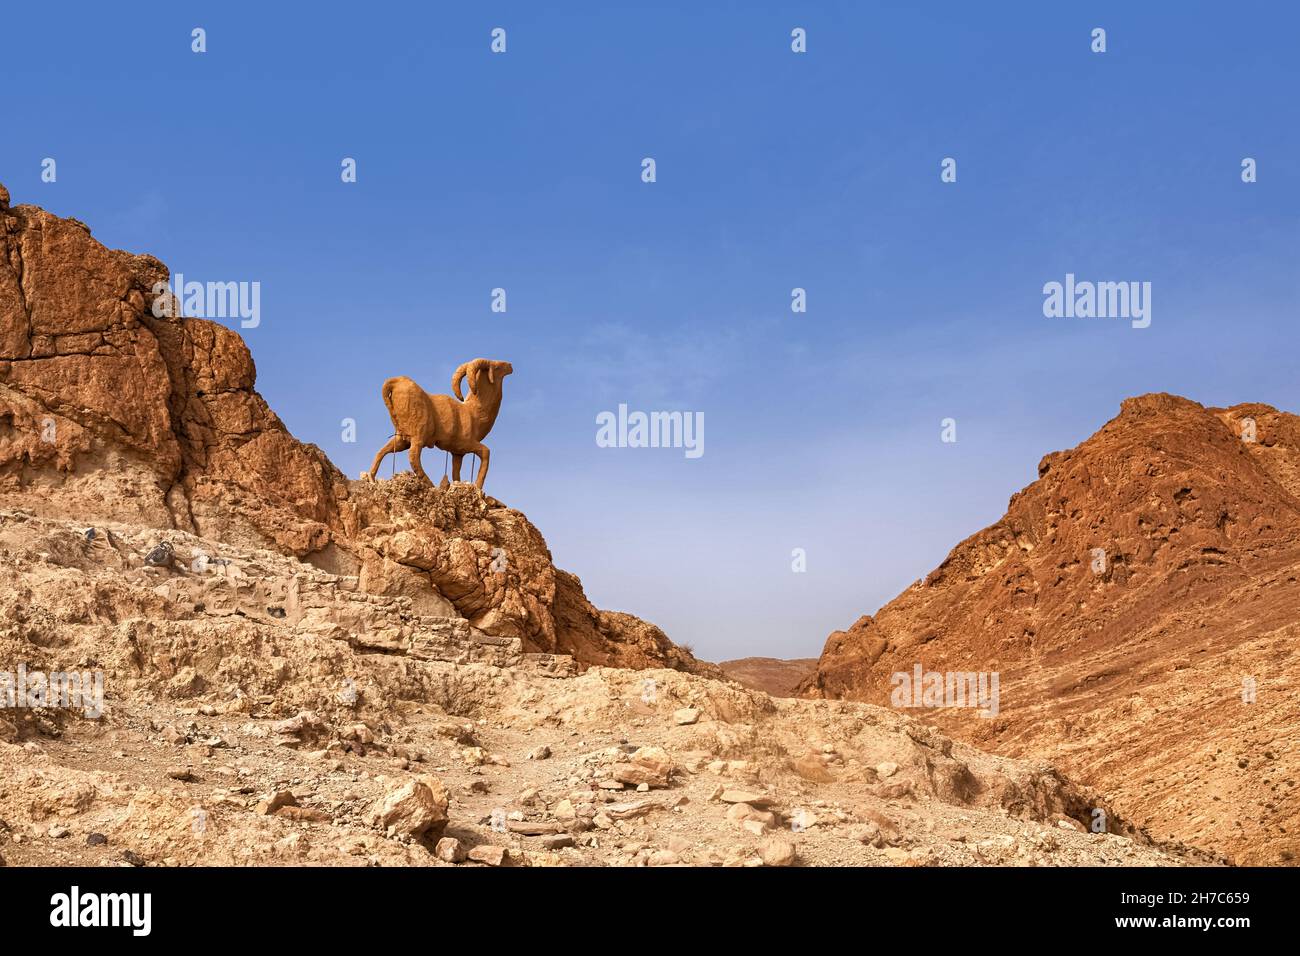 Mountain oasis Chebik, Sahara Desert, mountain peak in the desert with a sculpture of a mountain goat. Tunisia, Africa Stock Photo